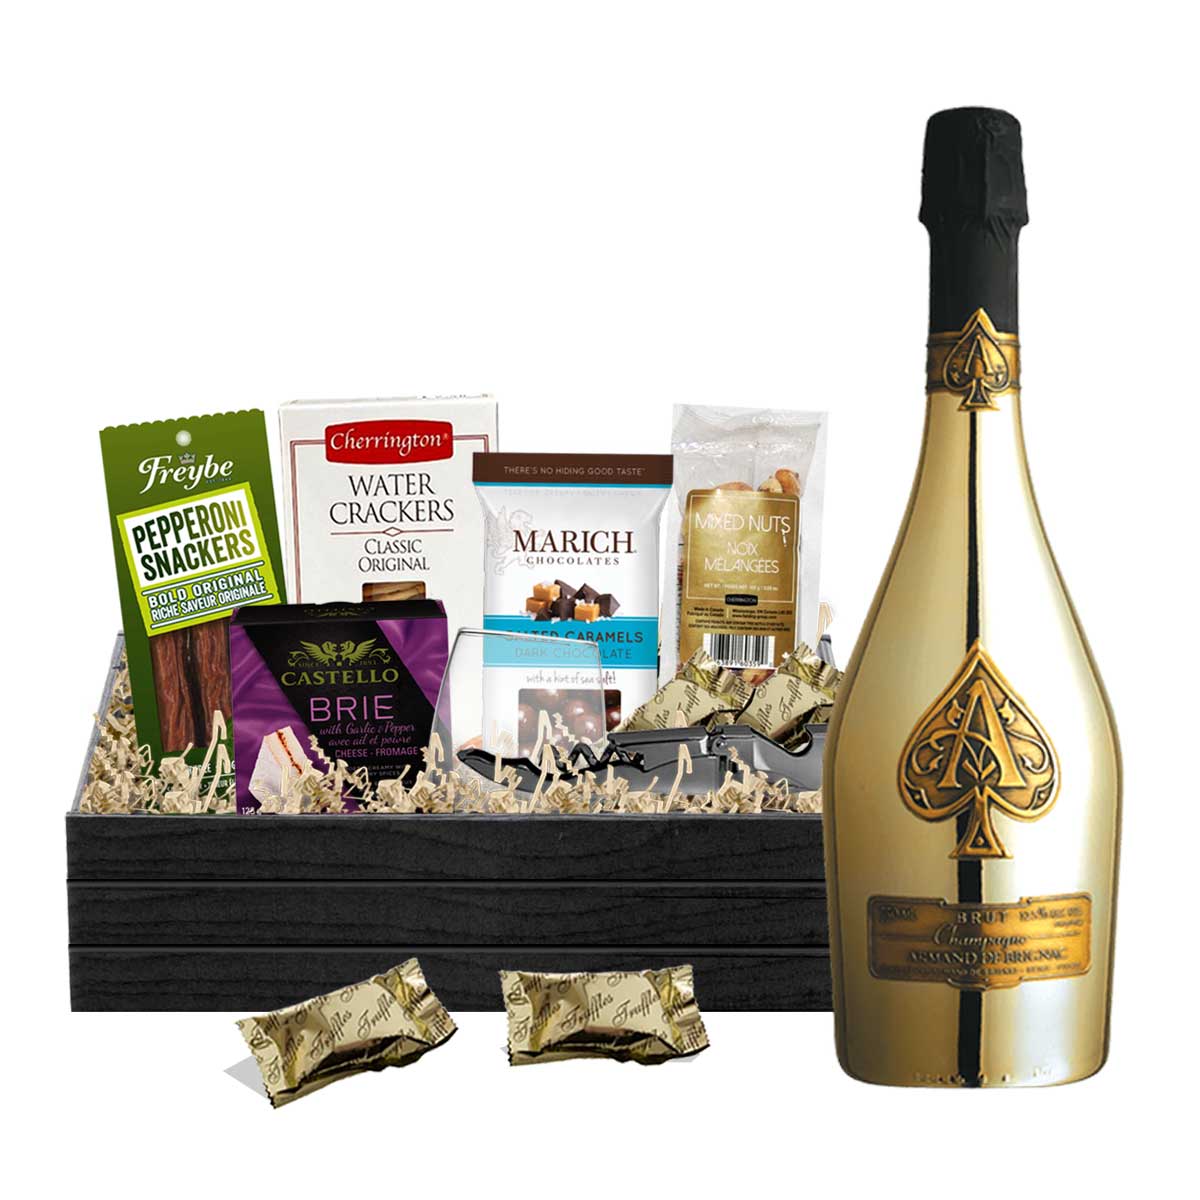 Armand de Brignac Ace of Spades Brut Gold Champagne - Gift Box